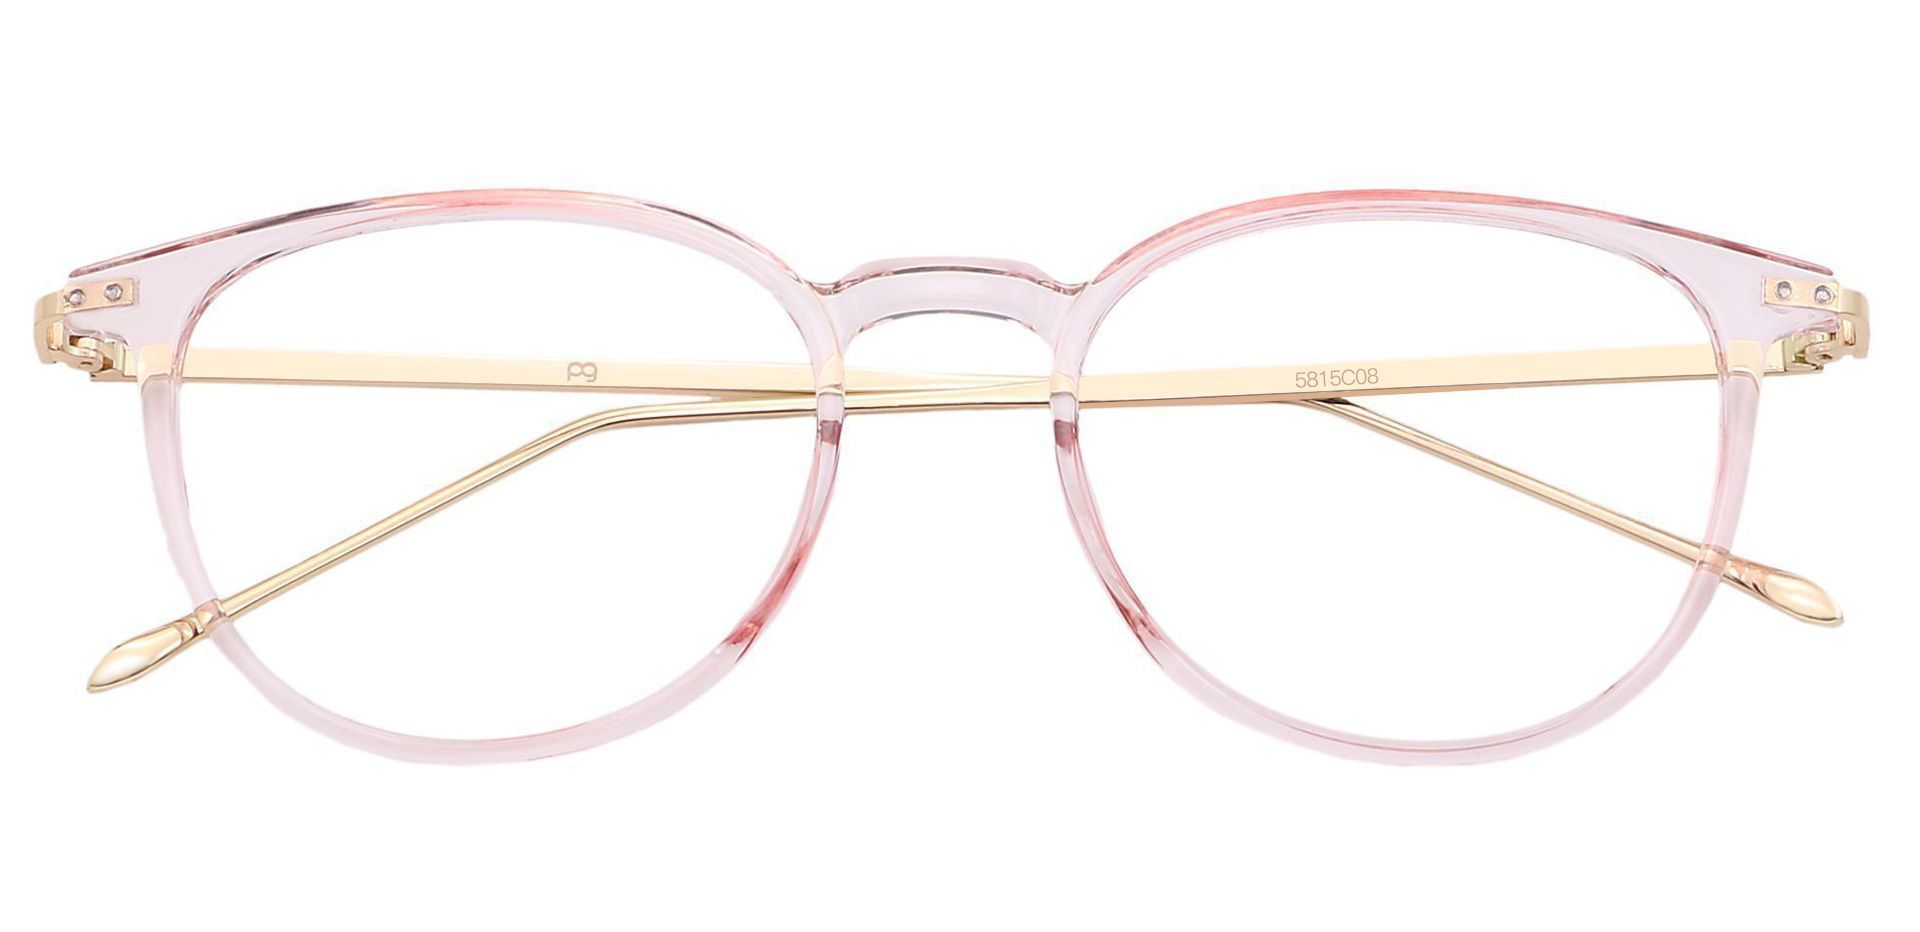 Elliott Round Lined Bifocal Glasses - Pink